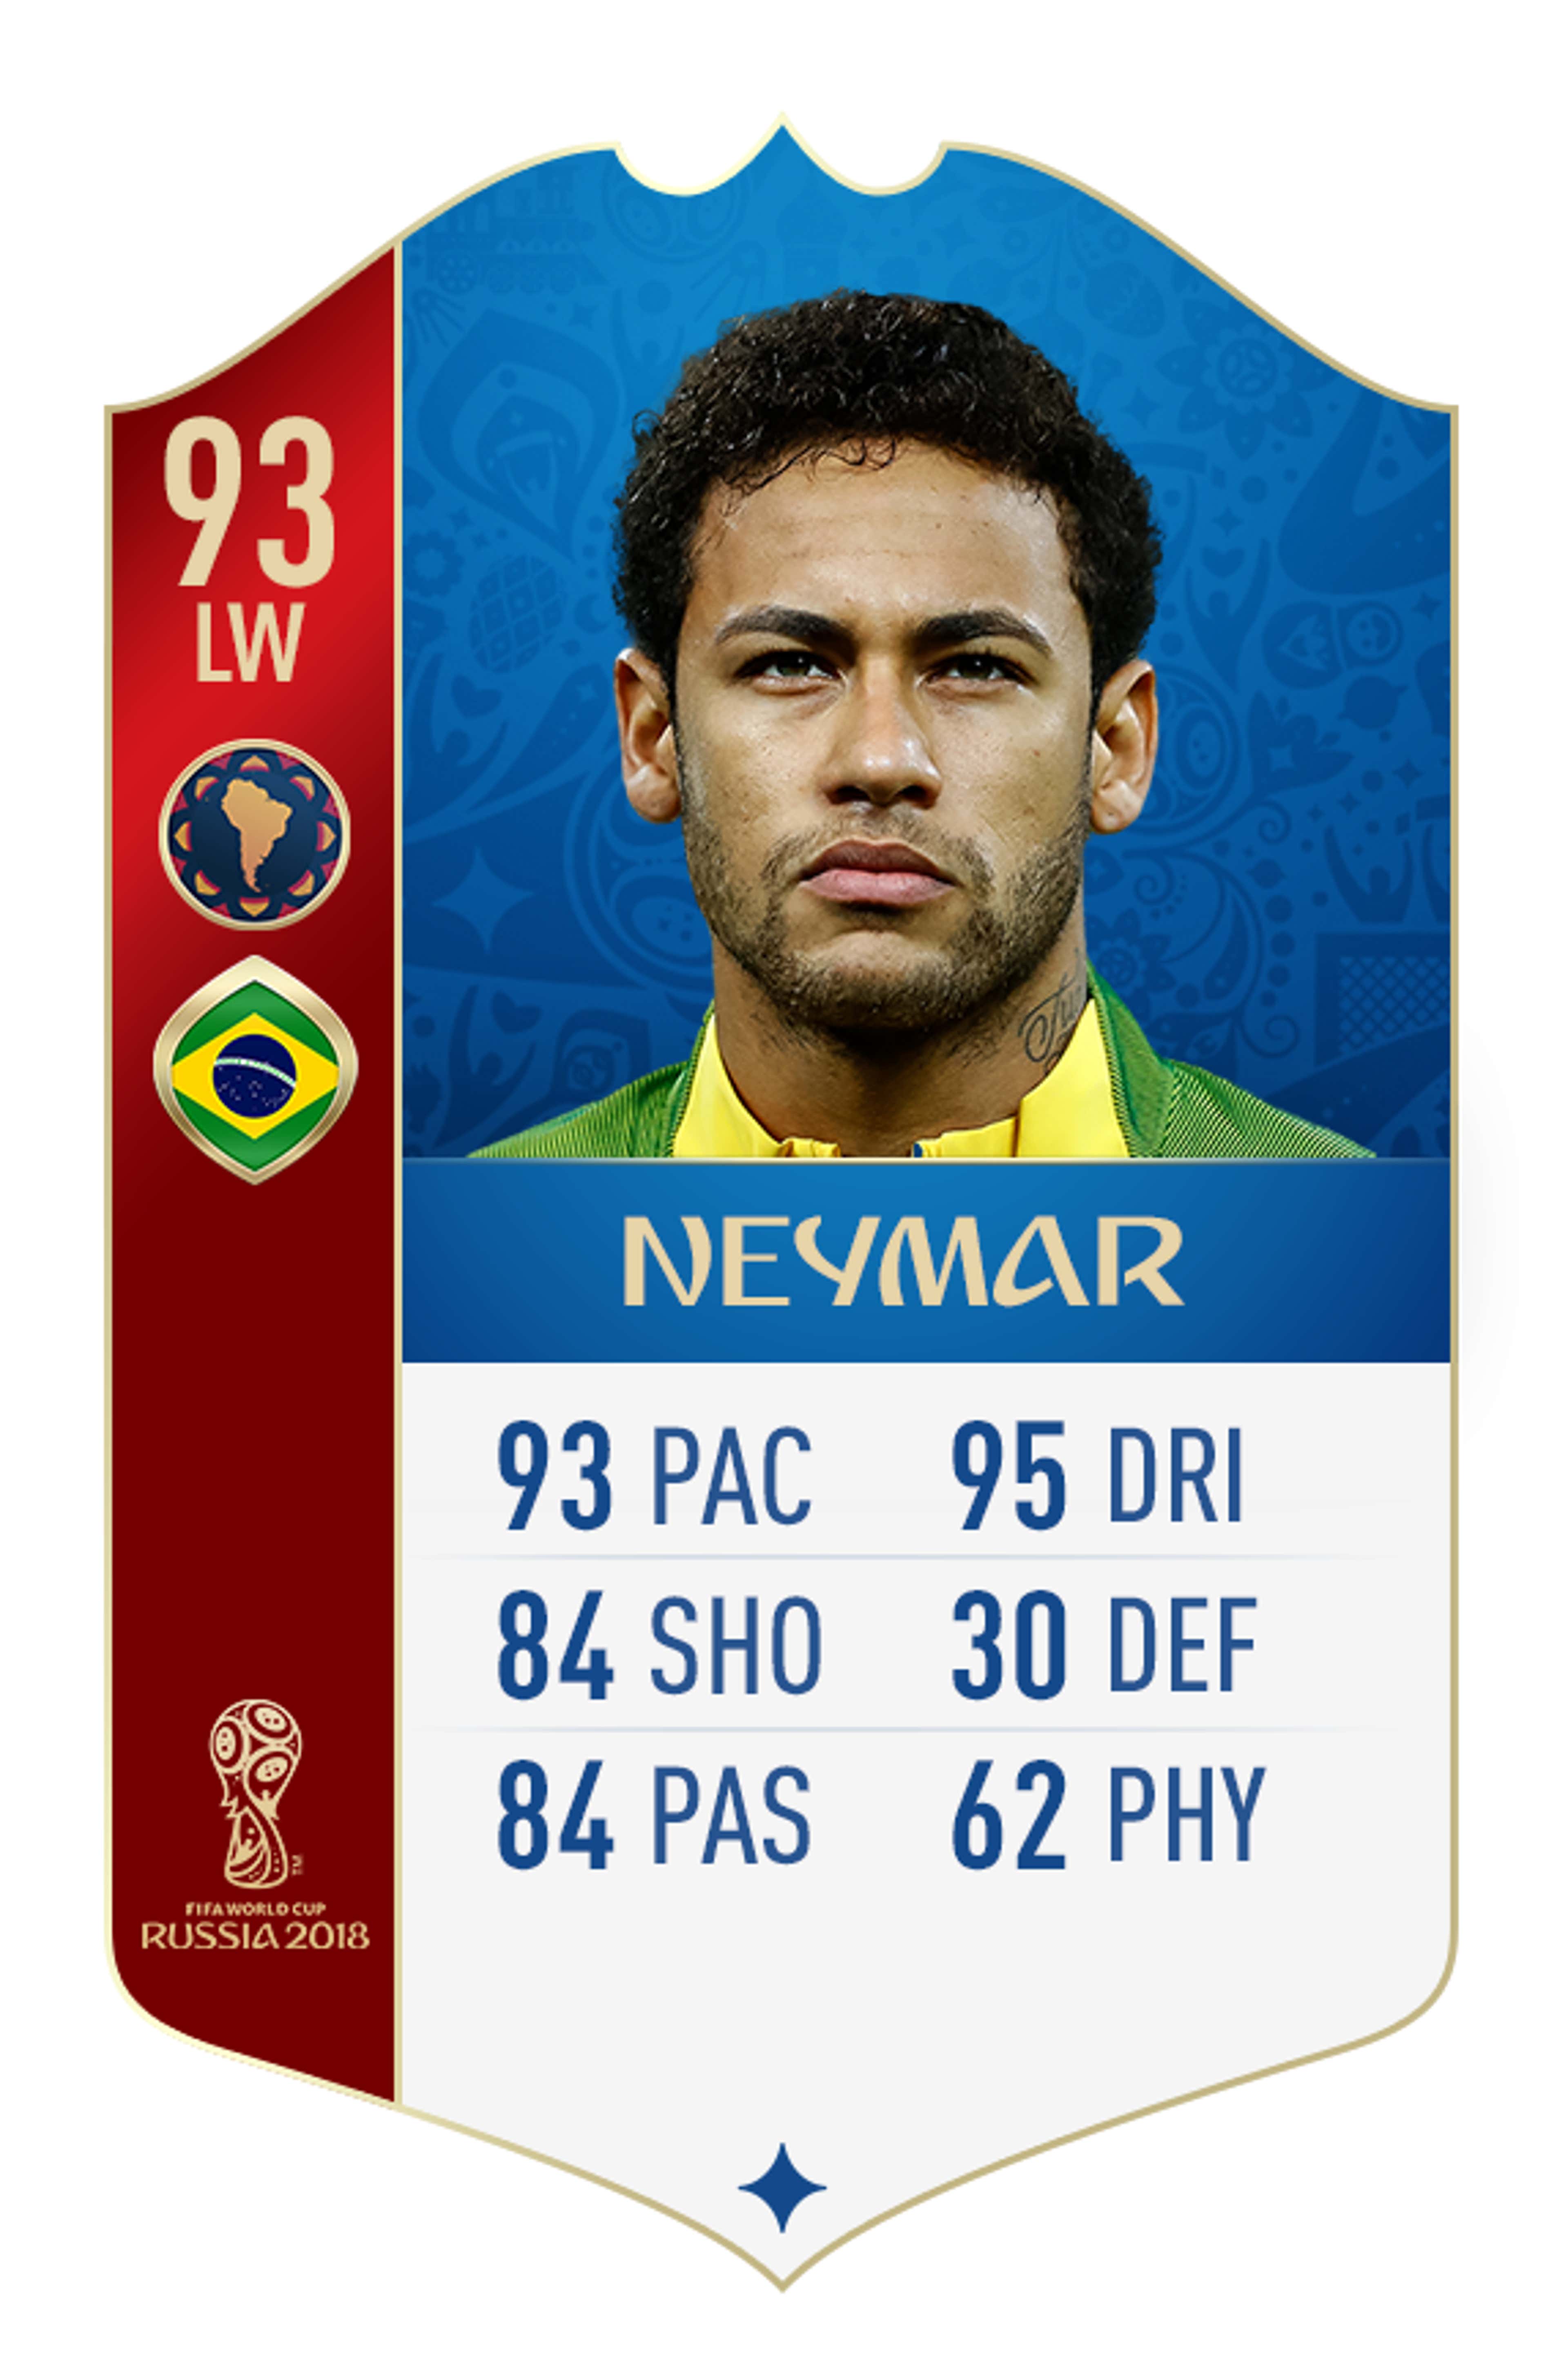 Neymar FIFA 18 World Cup rating